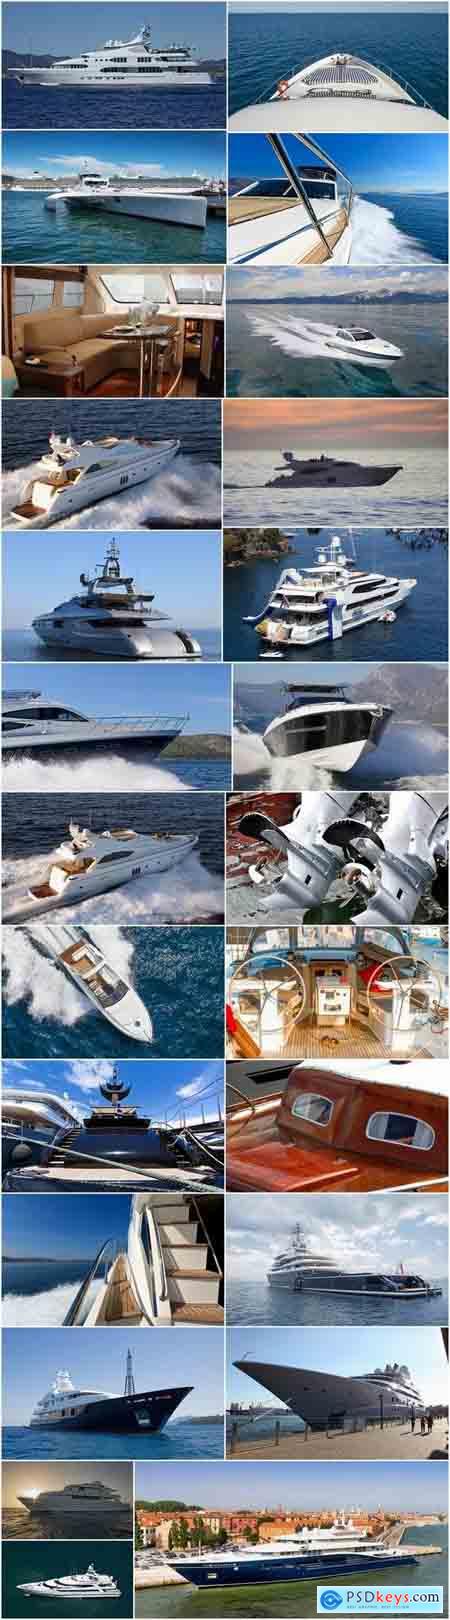 Motor yacht mast rope sea water nature leisure 25 HQ Jpeg